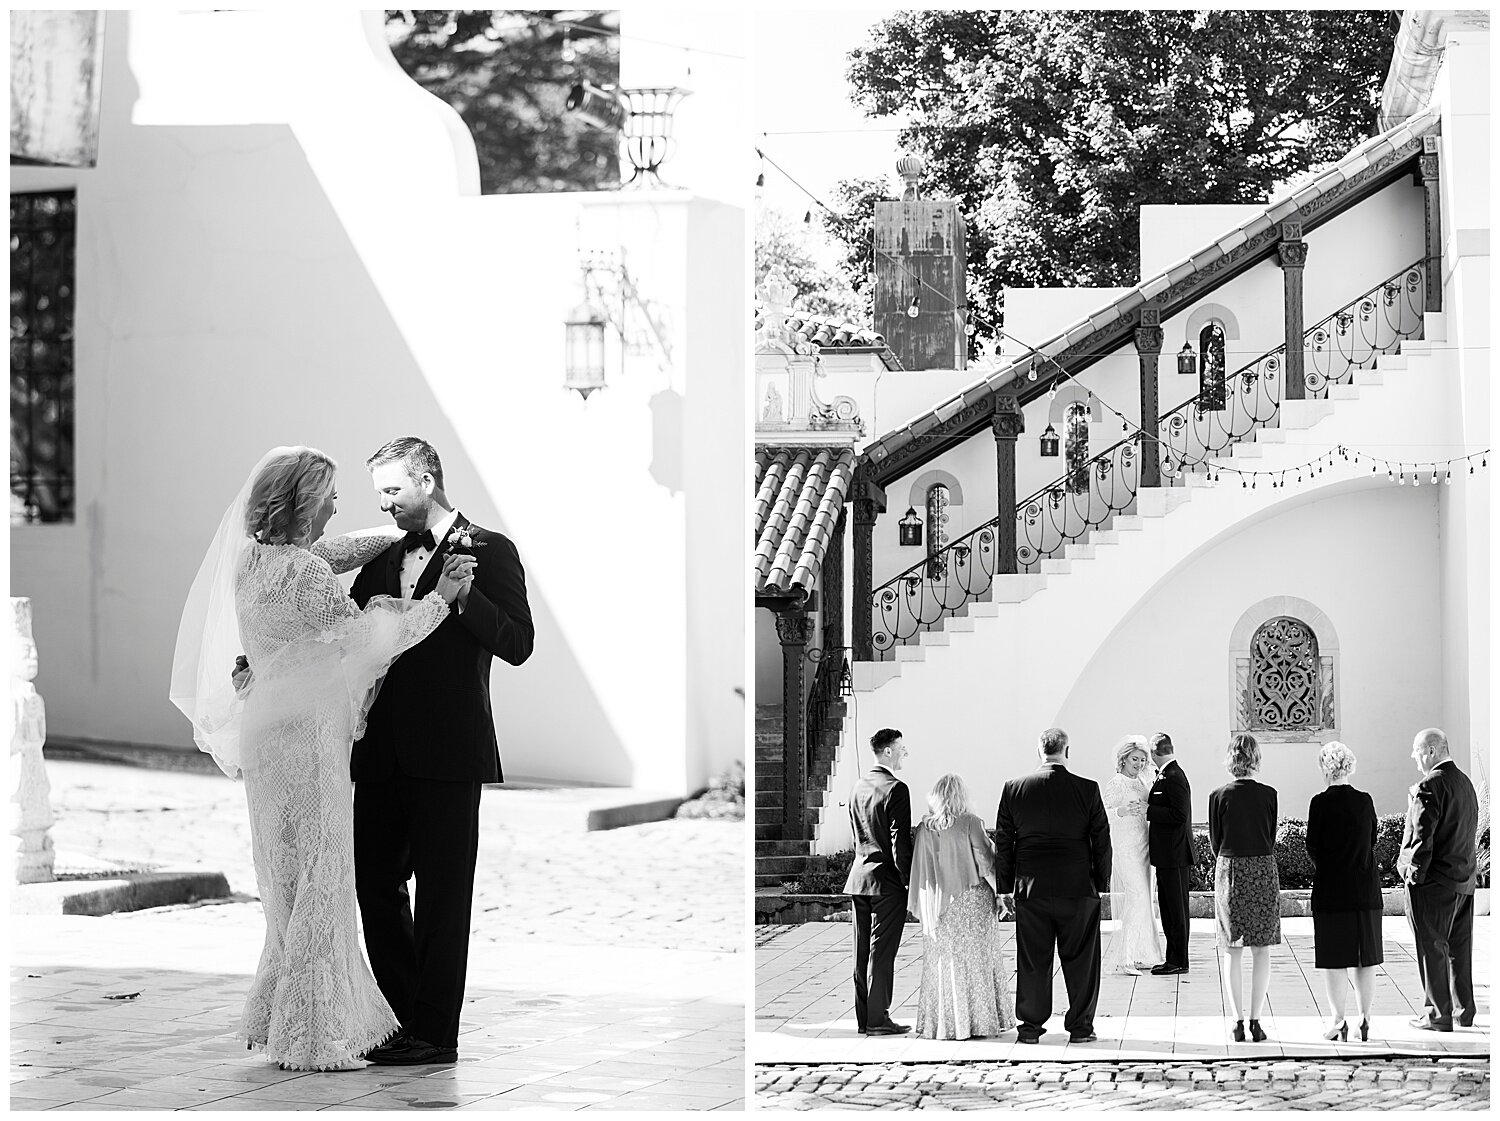 Vanderbilt-Museum-Intimate-Wedding-Apollo-Fields-59.jpg